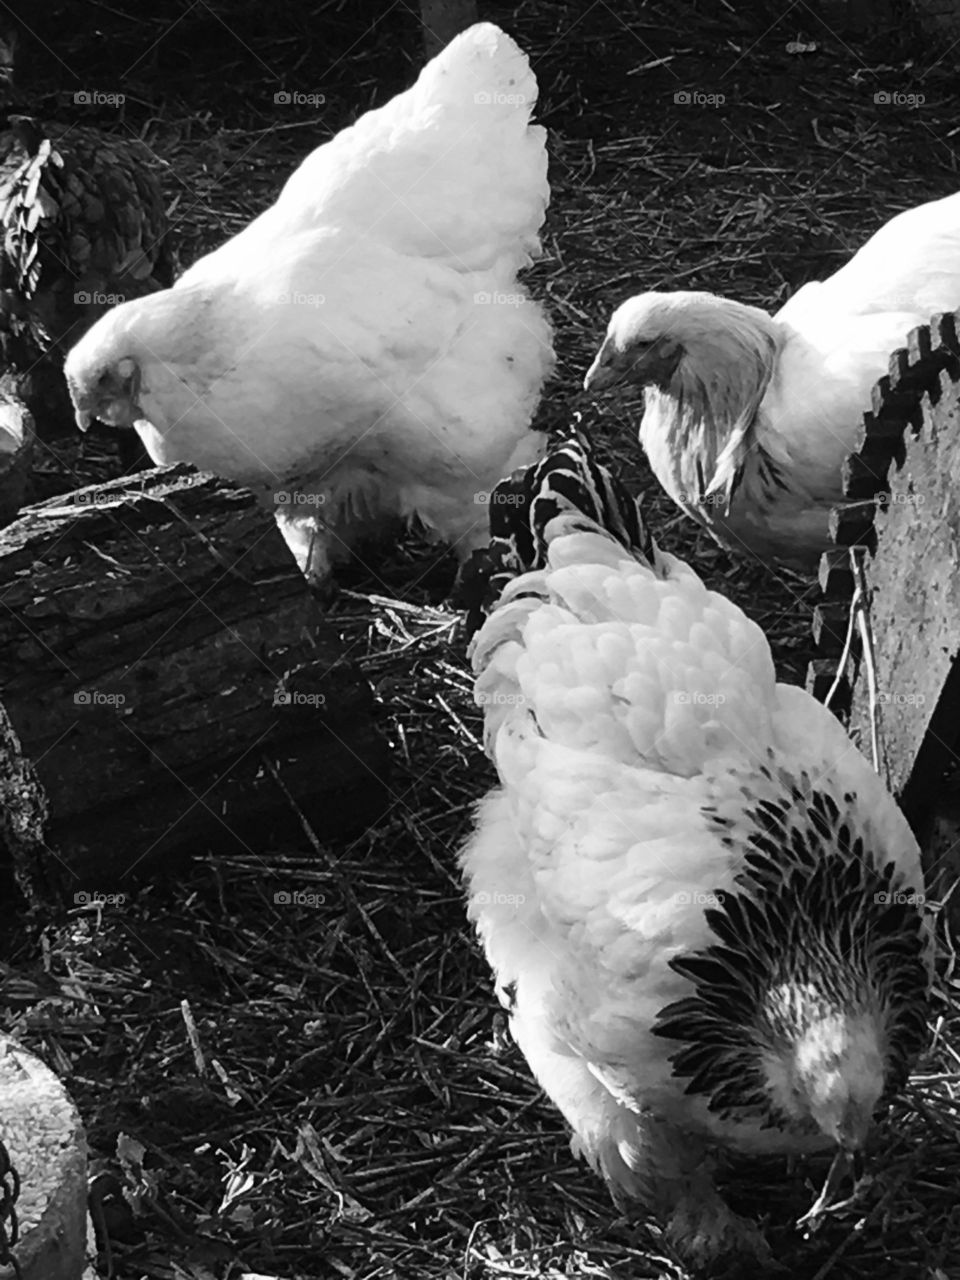 Brahma hens / chickens pecking around the farmyard.